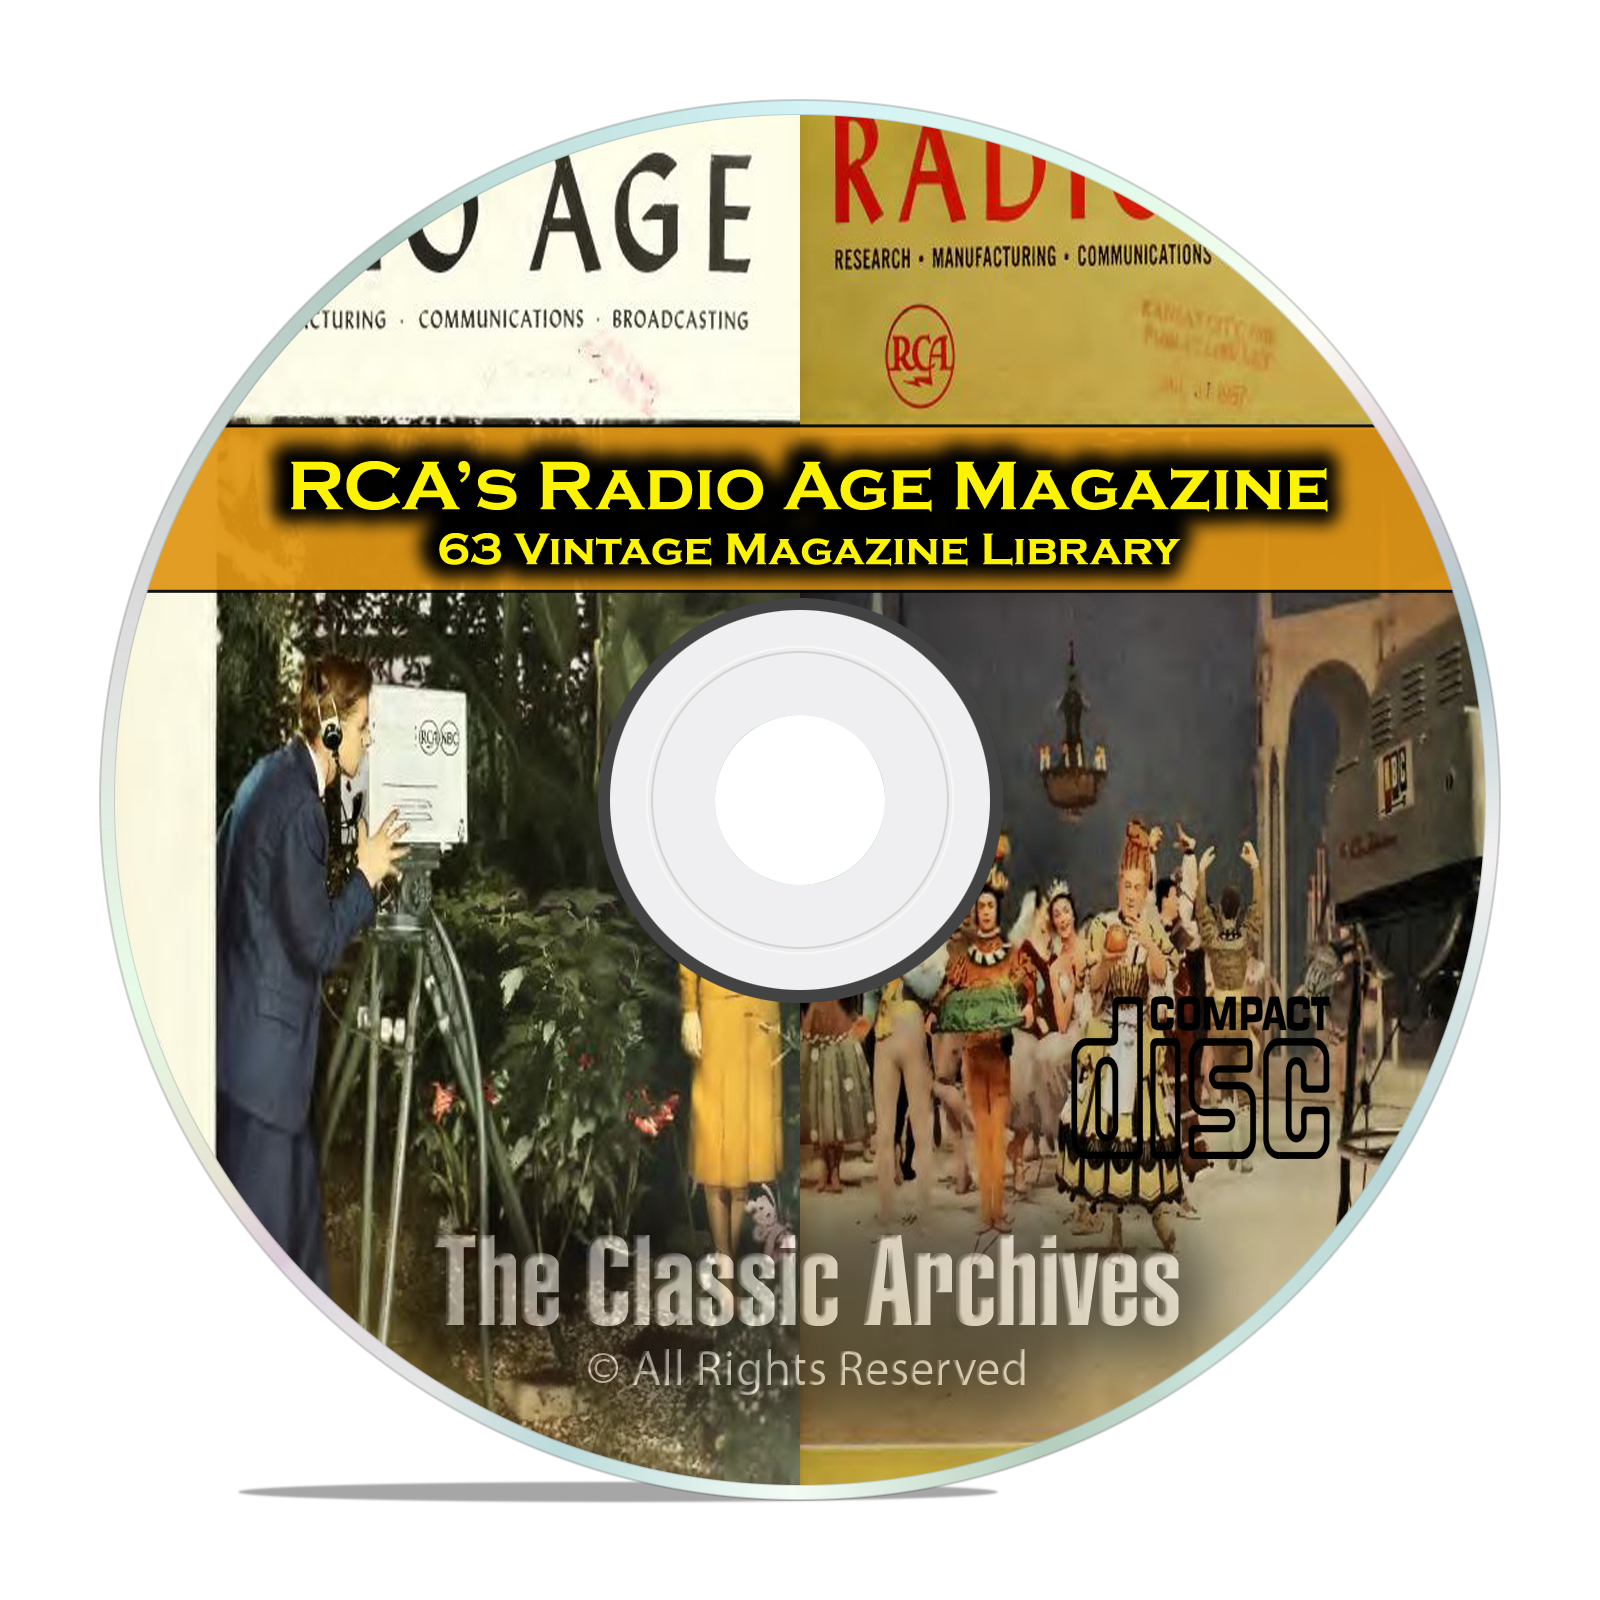 RCA Radio Age, 63 Vintage Old Time Radio Magazine Collection on PDF CD